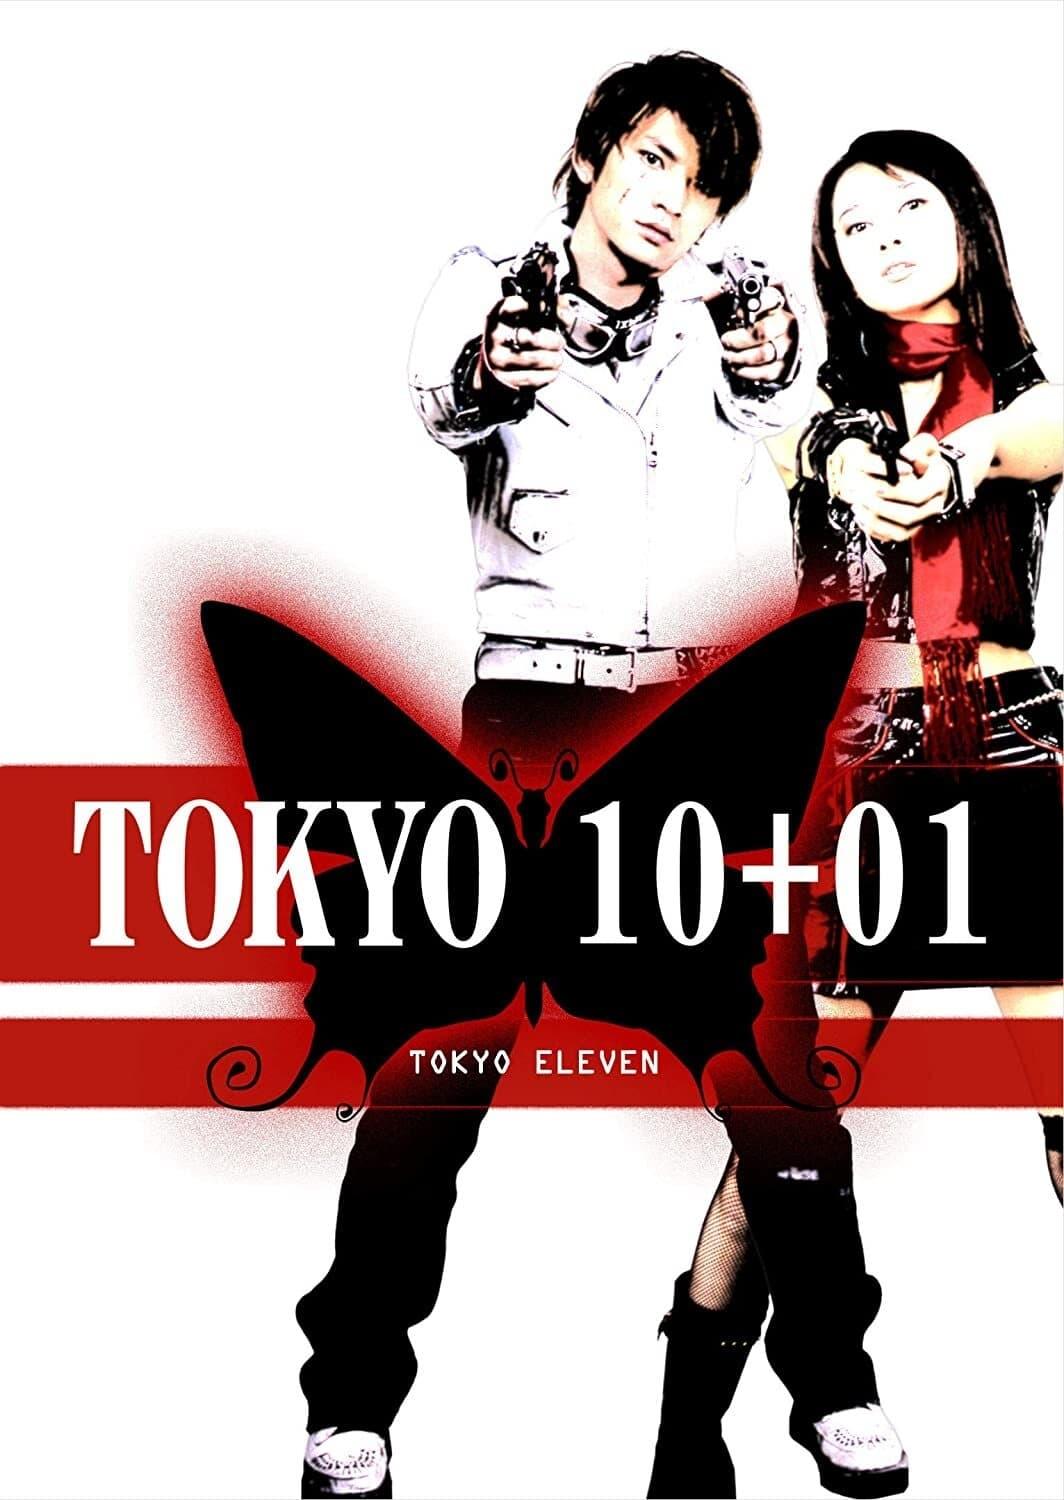 Tokyo 10+01 poster